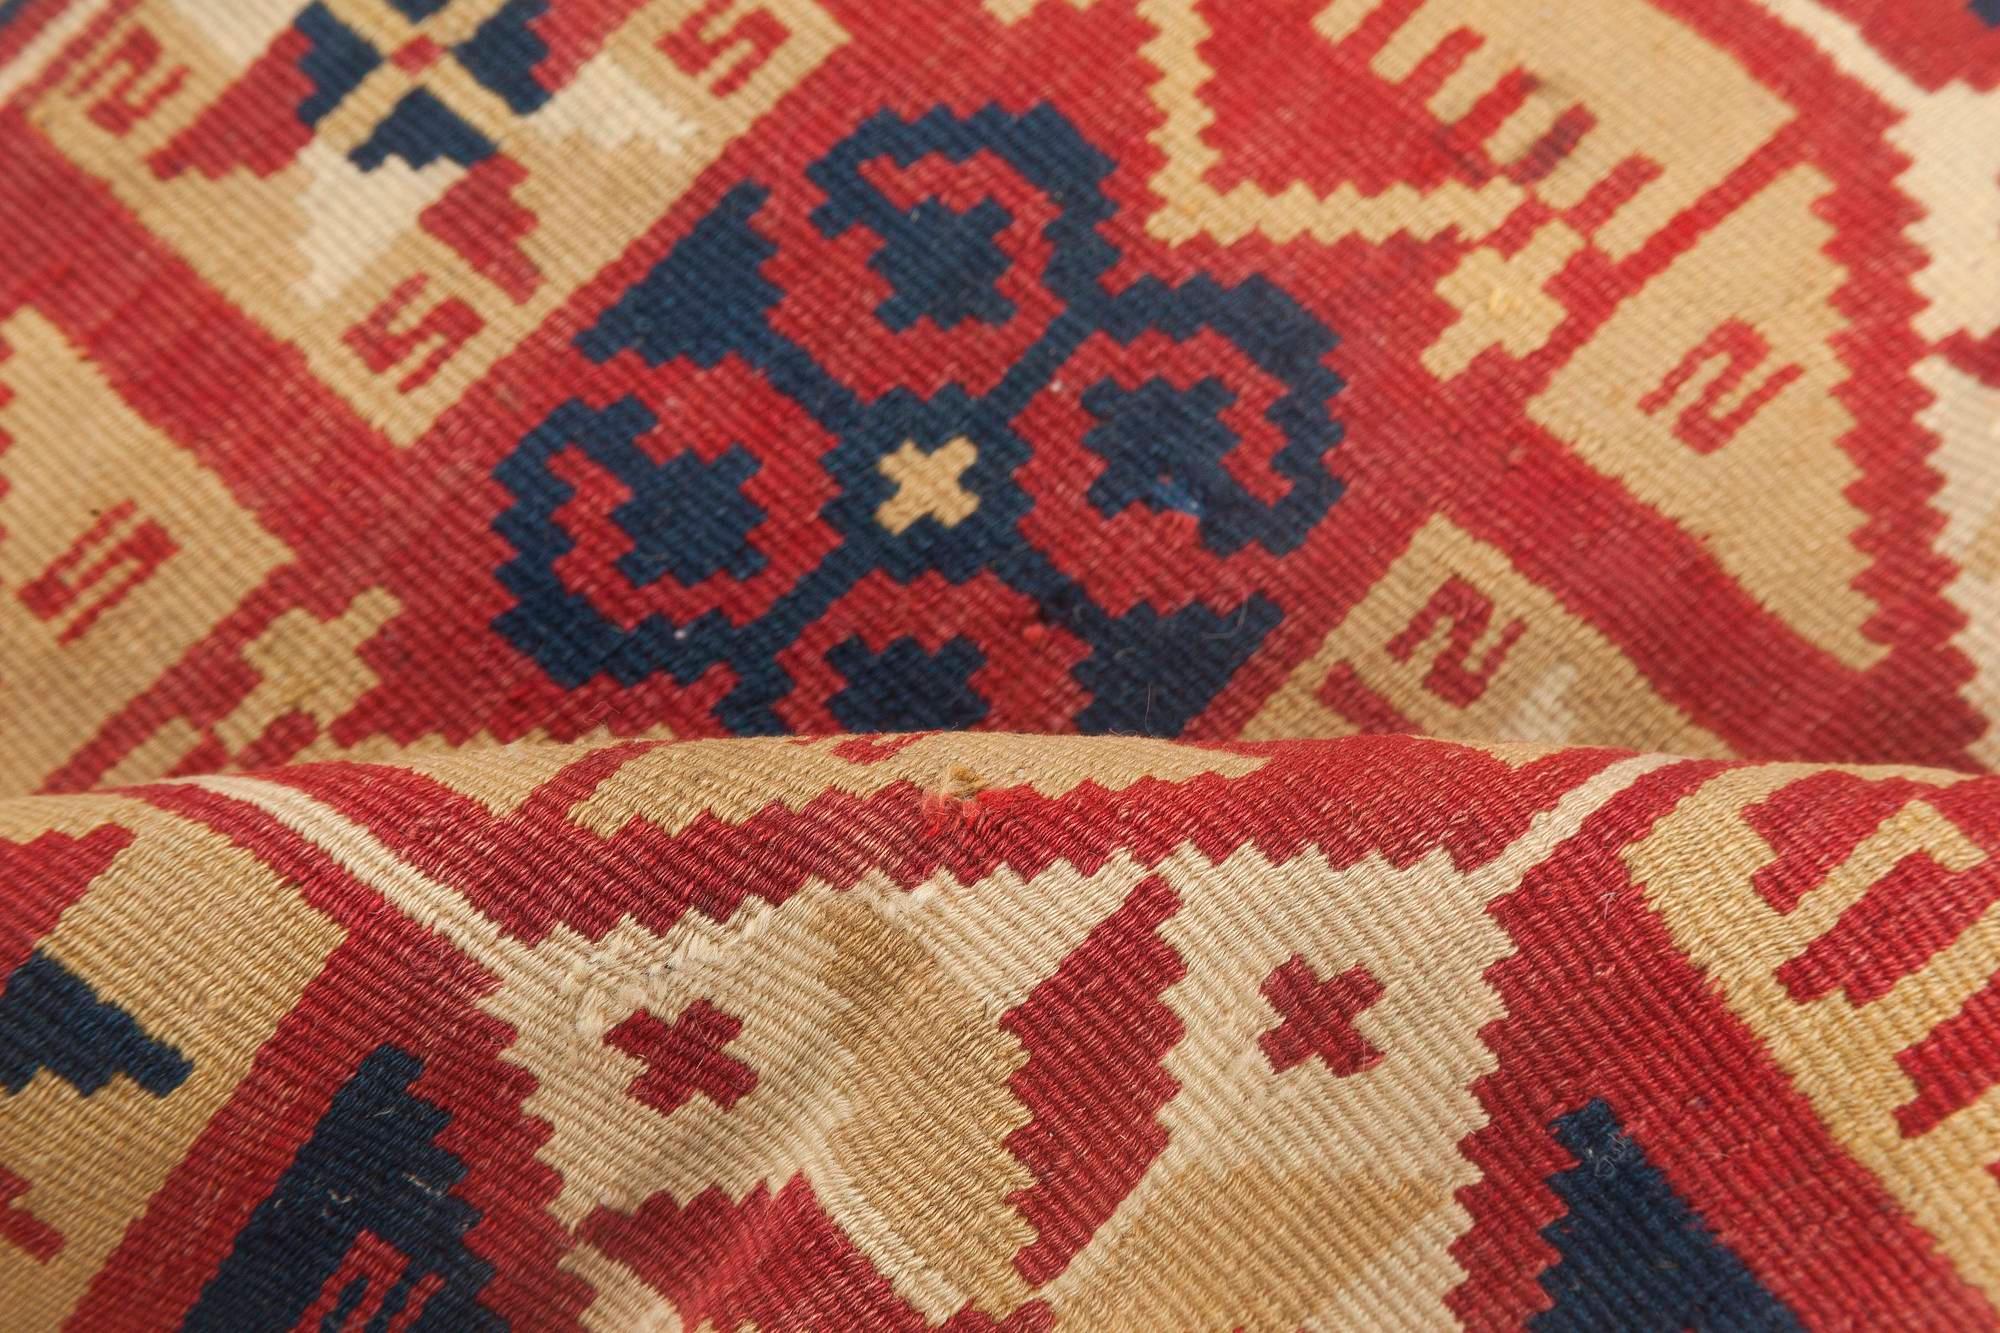 Small vintage geometric red, blue Swedish flat-weave wool rug
Size: 1'10